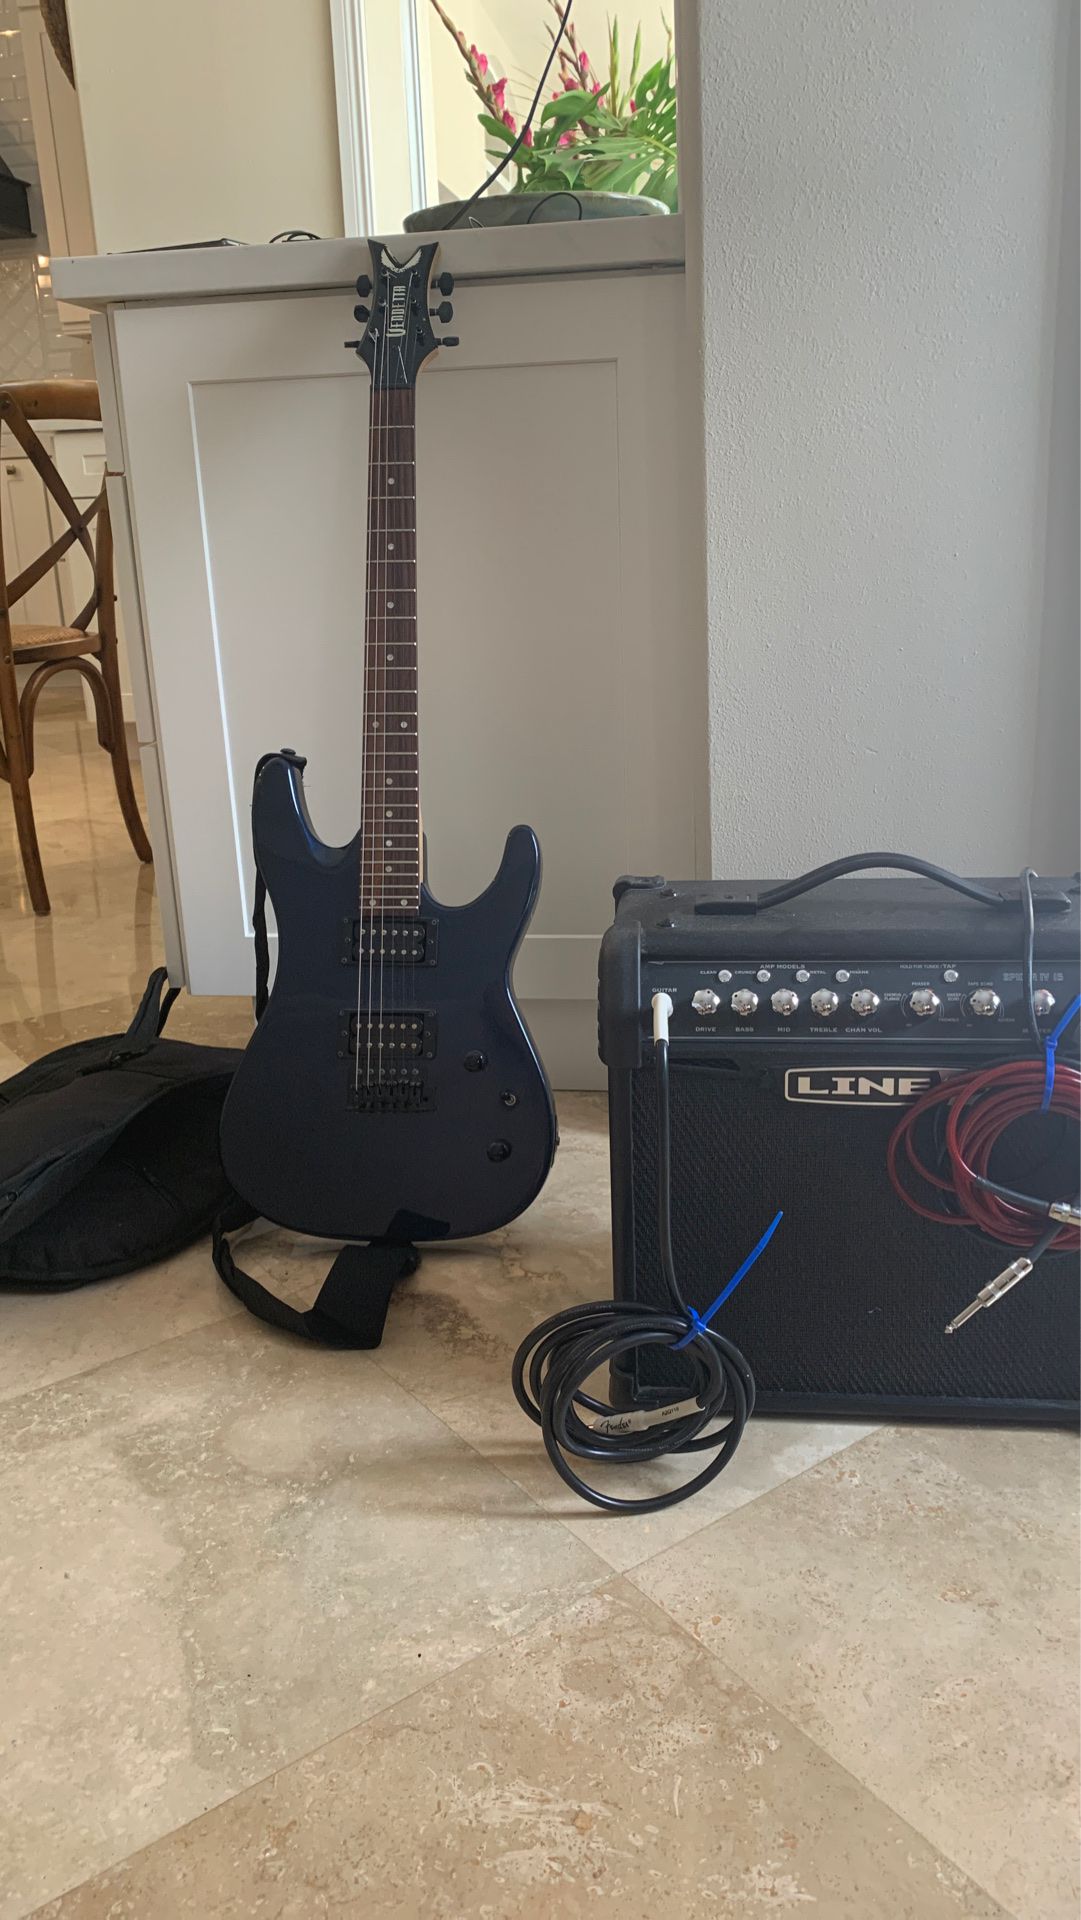 Dean Vendeta Electric Guitar and Line 6 Spider IV 15 Amp